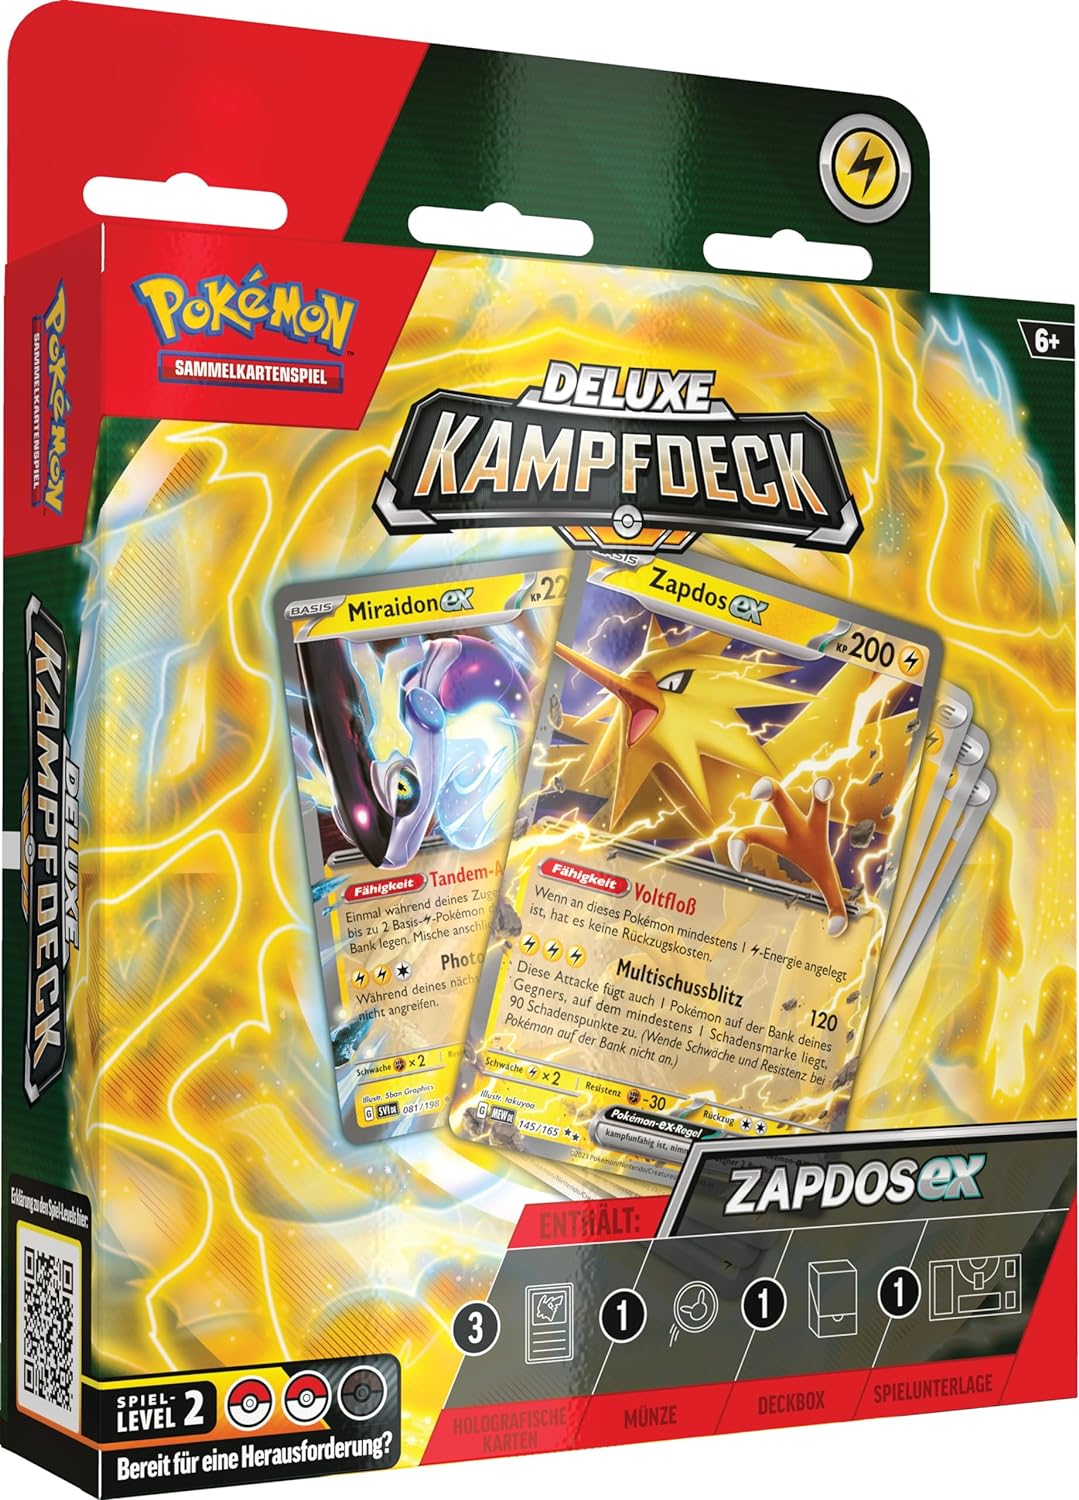 Deluxe-Kampfdeck Zapdos-ex